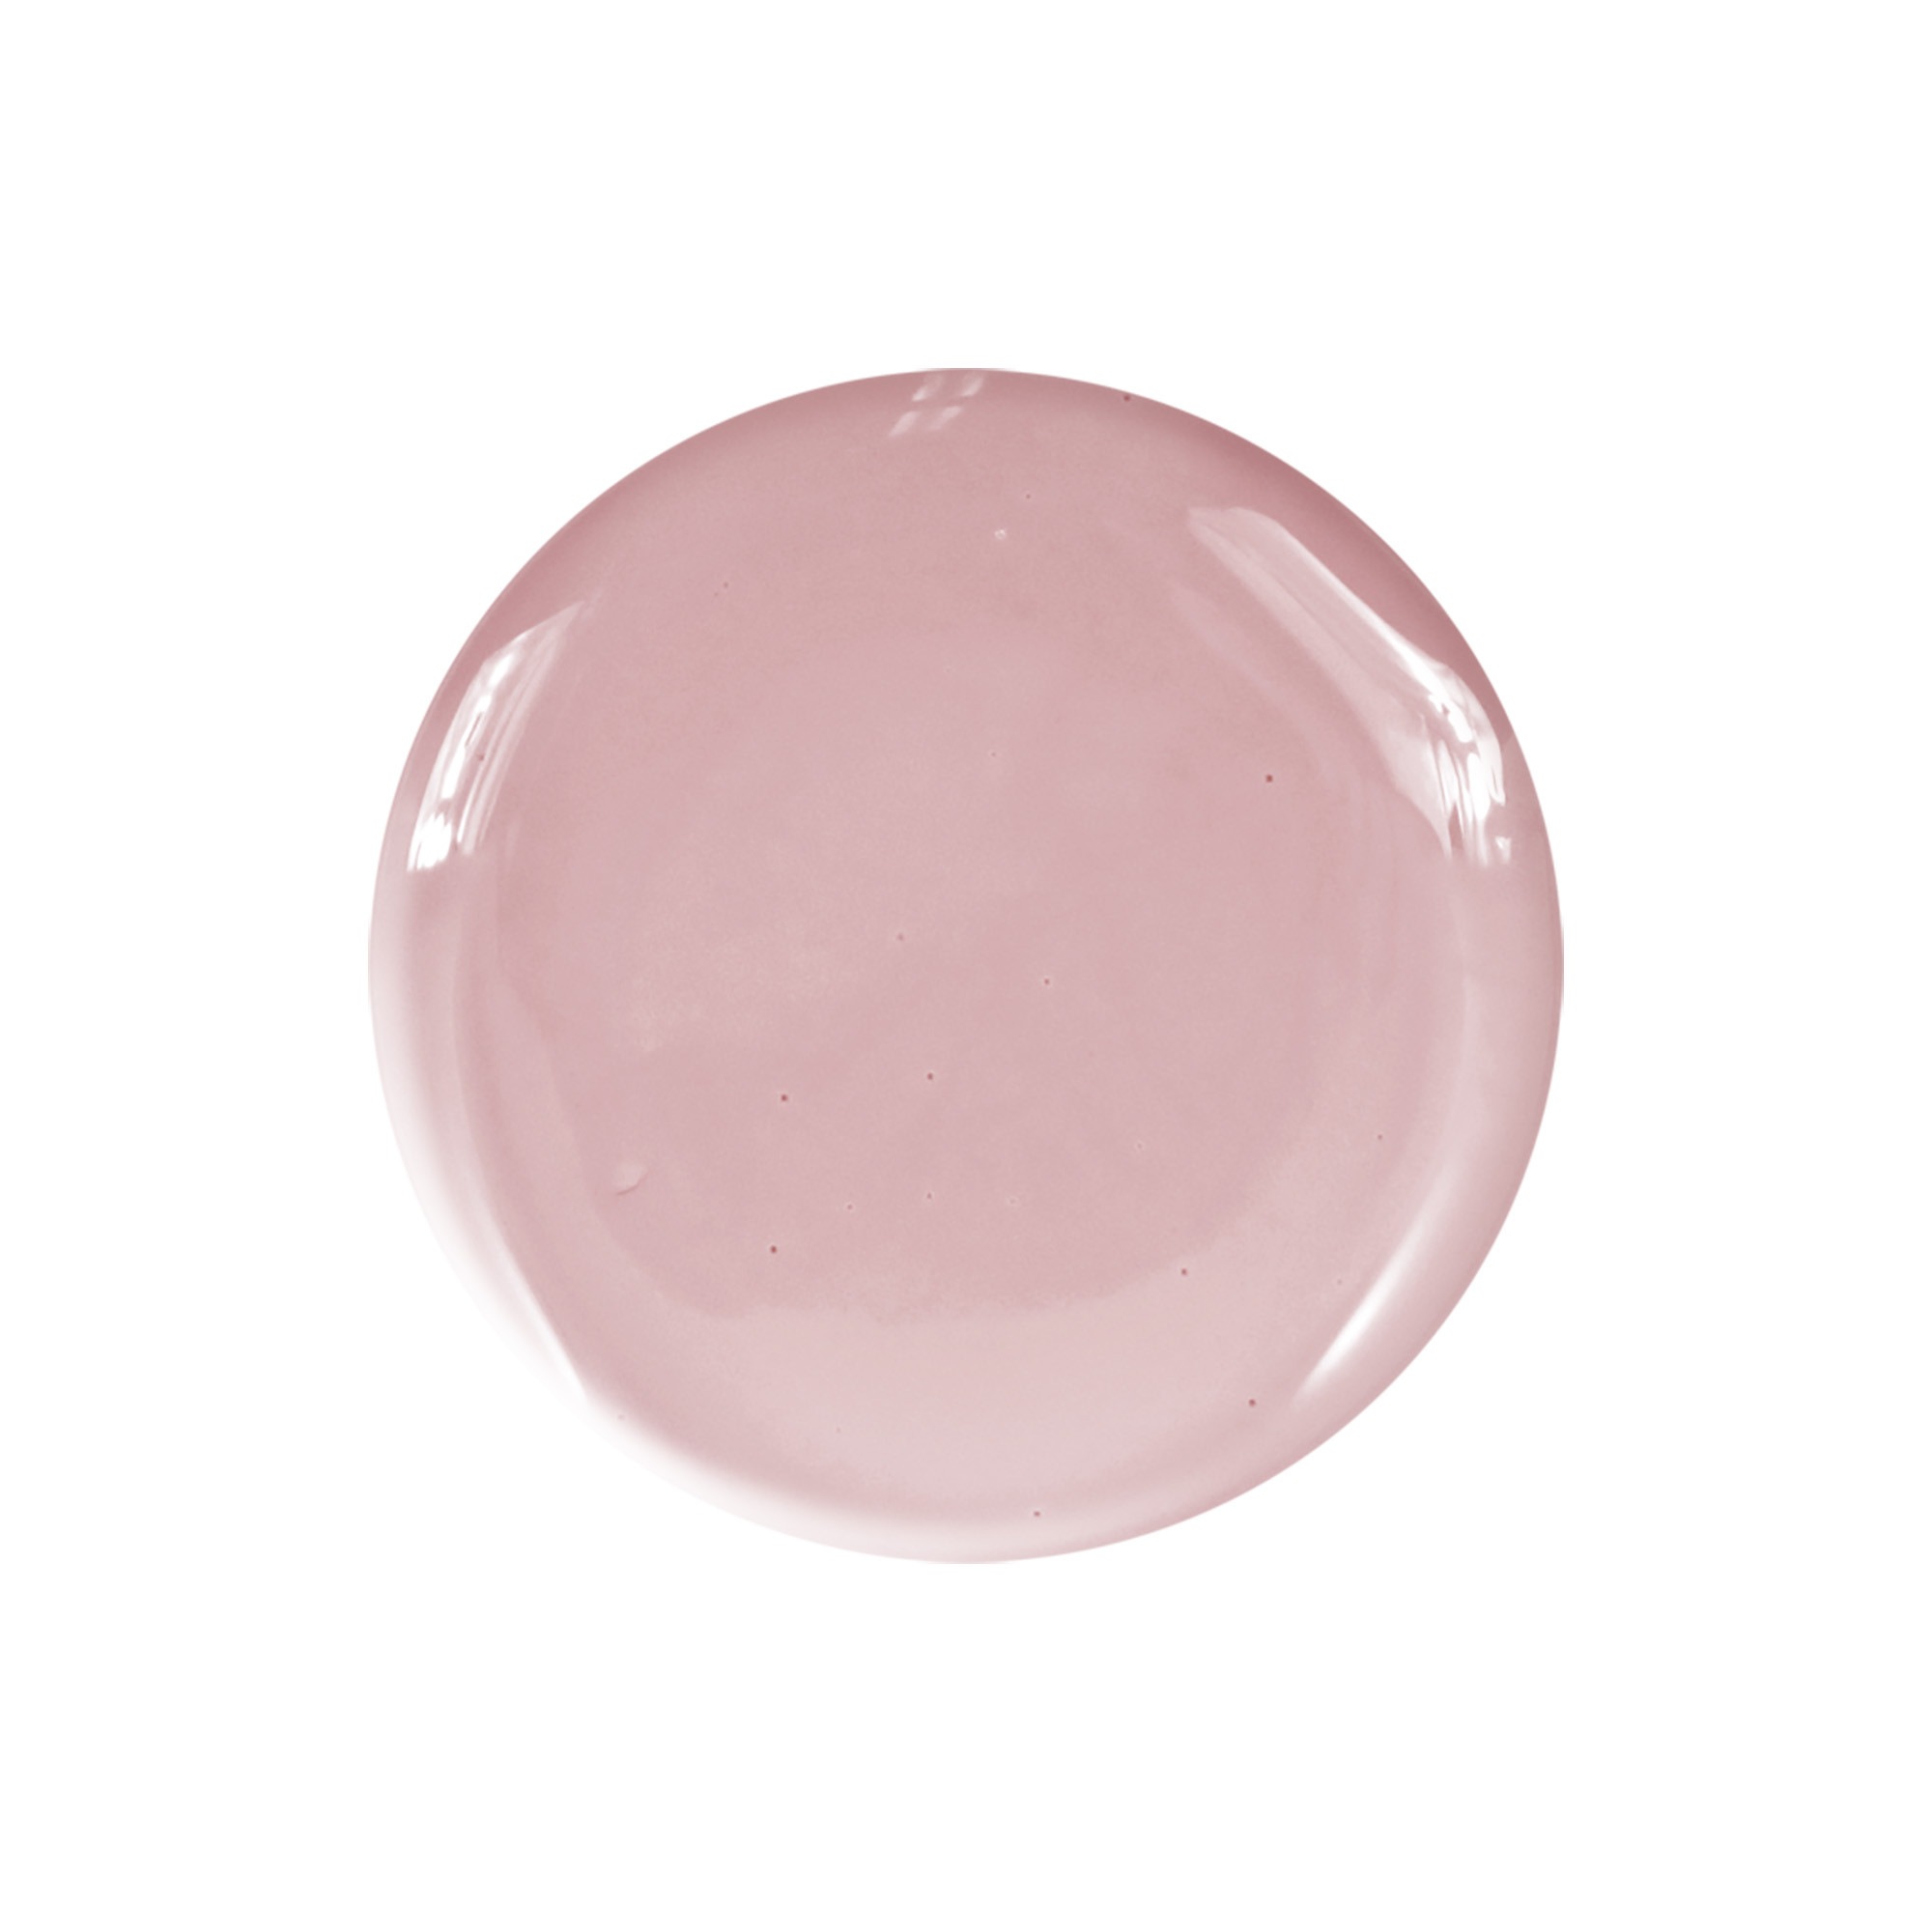 Nagellack Feel Beauty nude pink 10 ml TNS